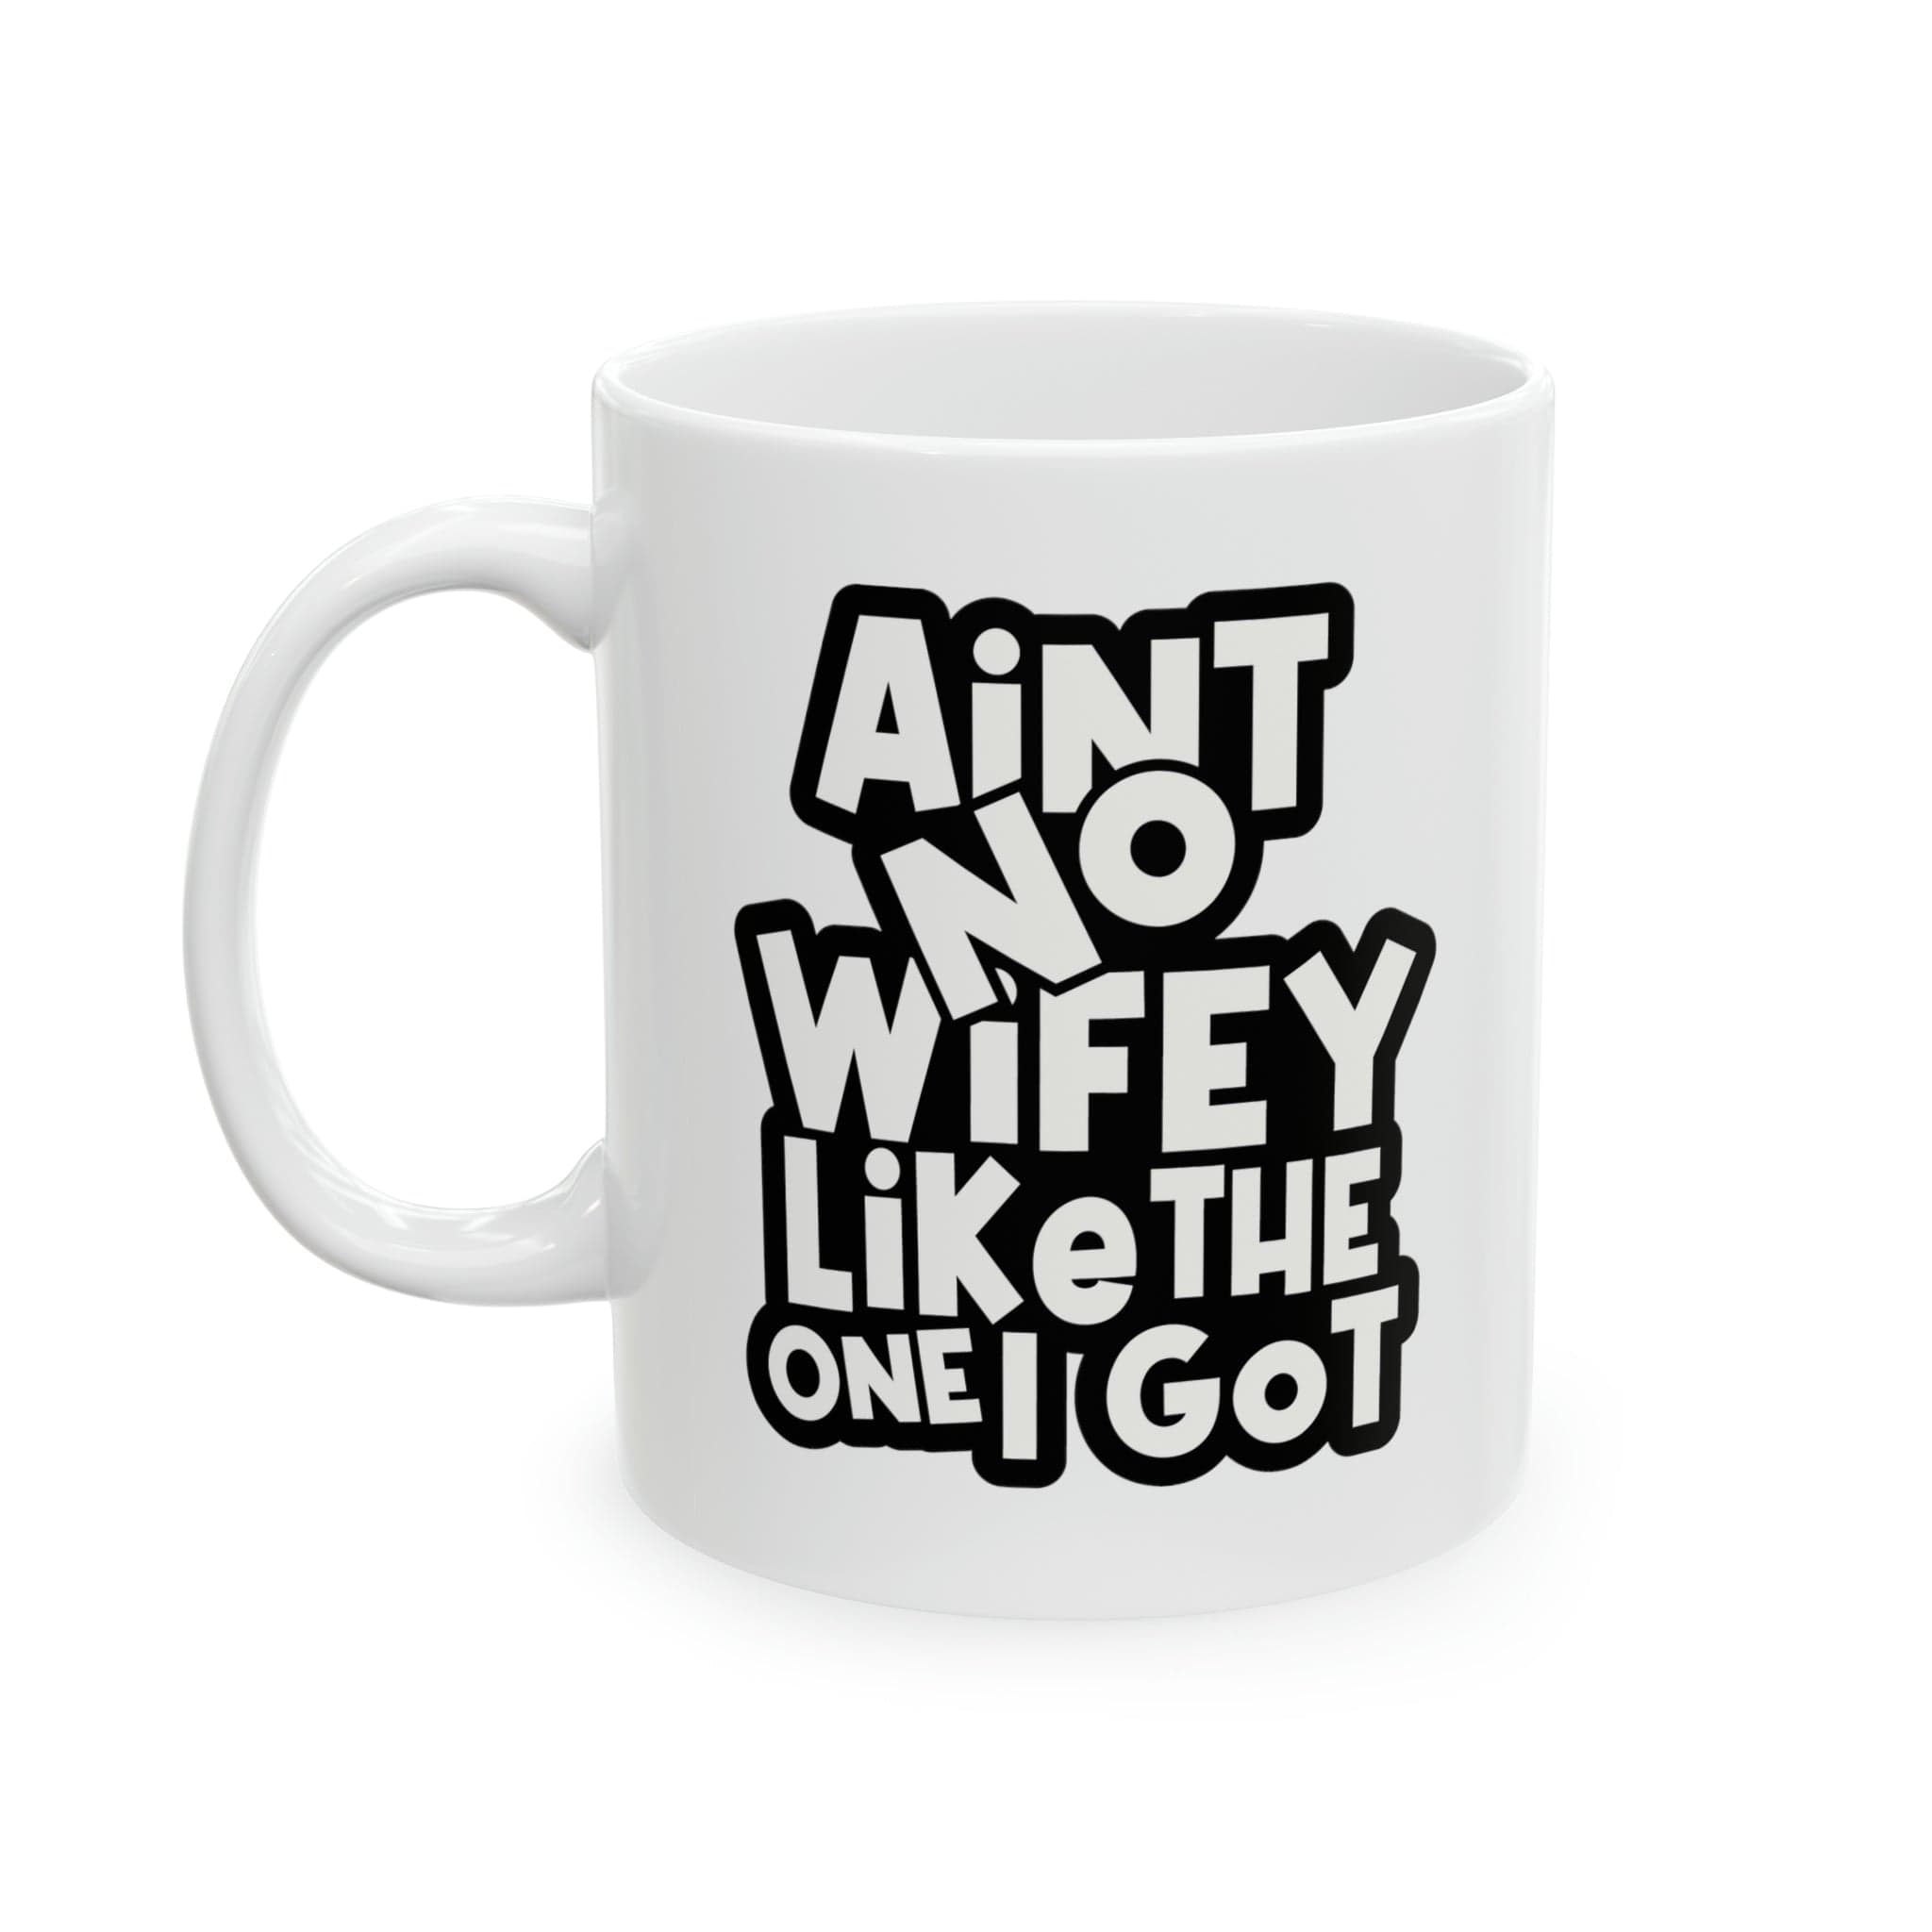 Aint No Wifey Like The One I got Ceramic Mug, 11oz